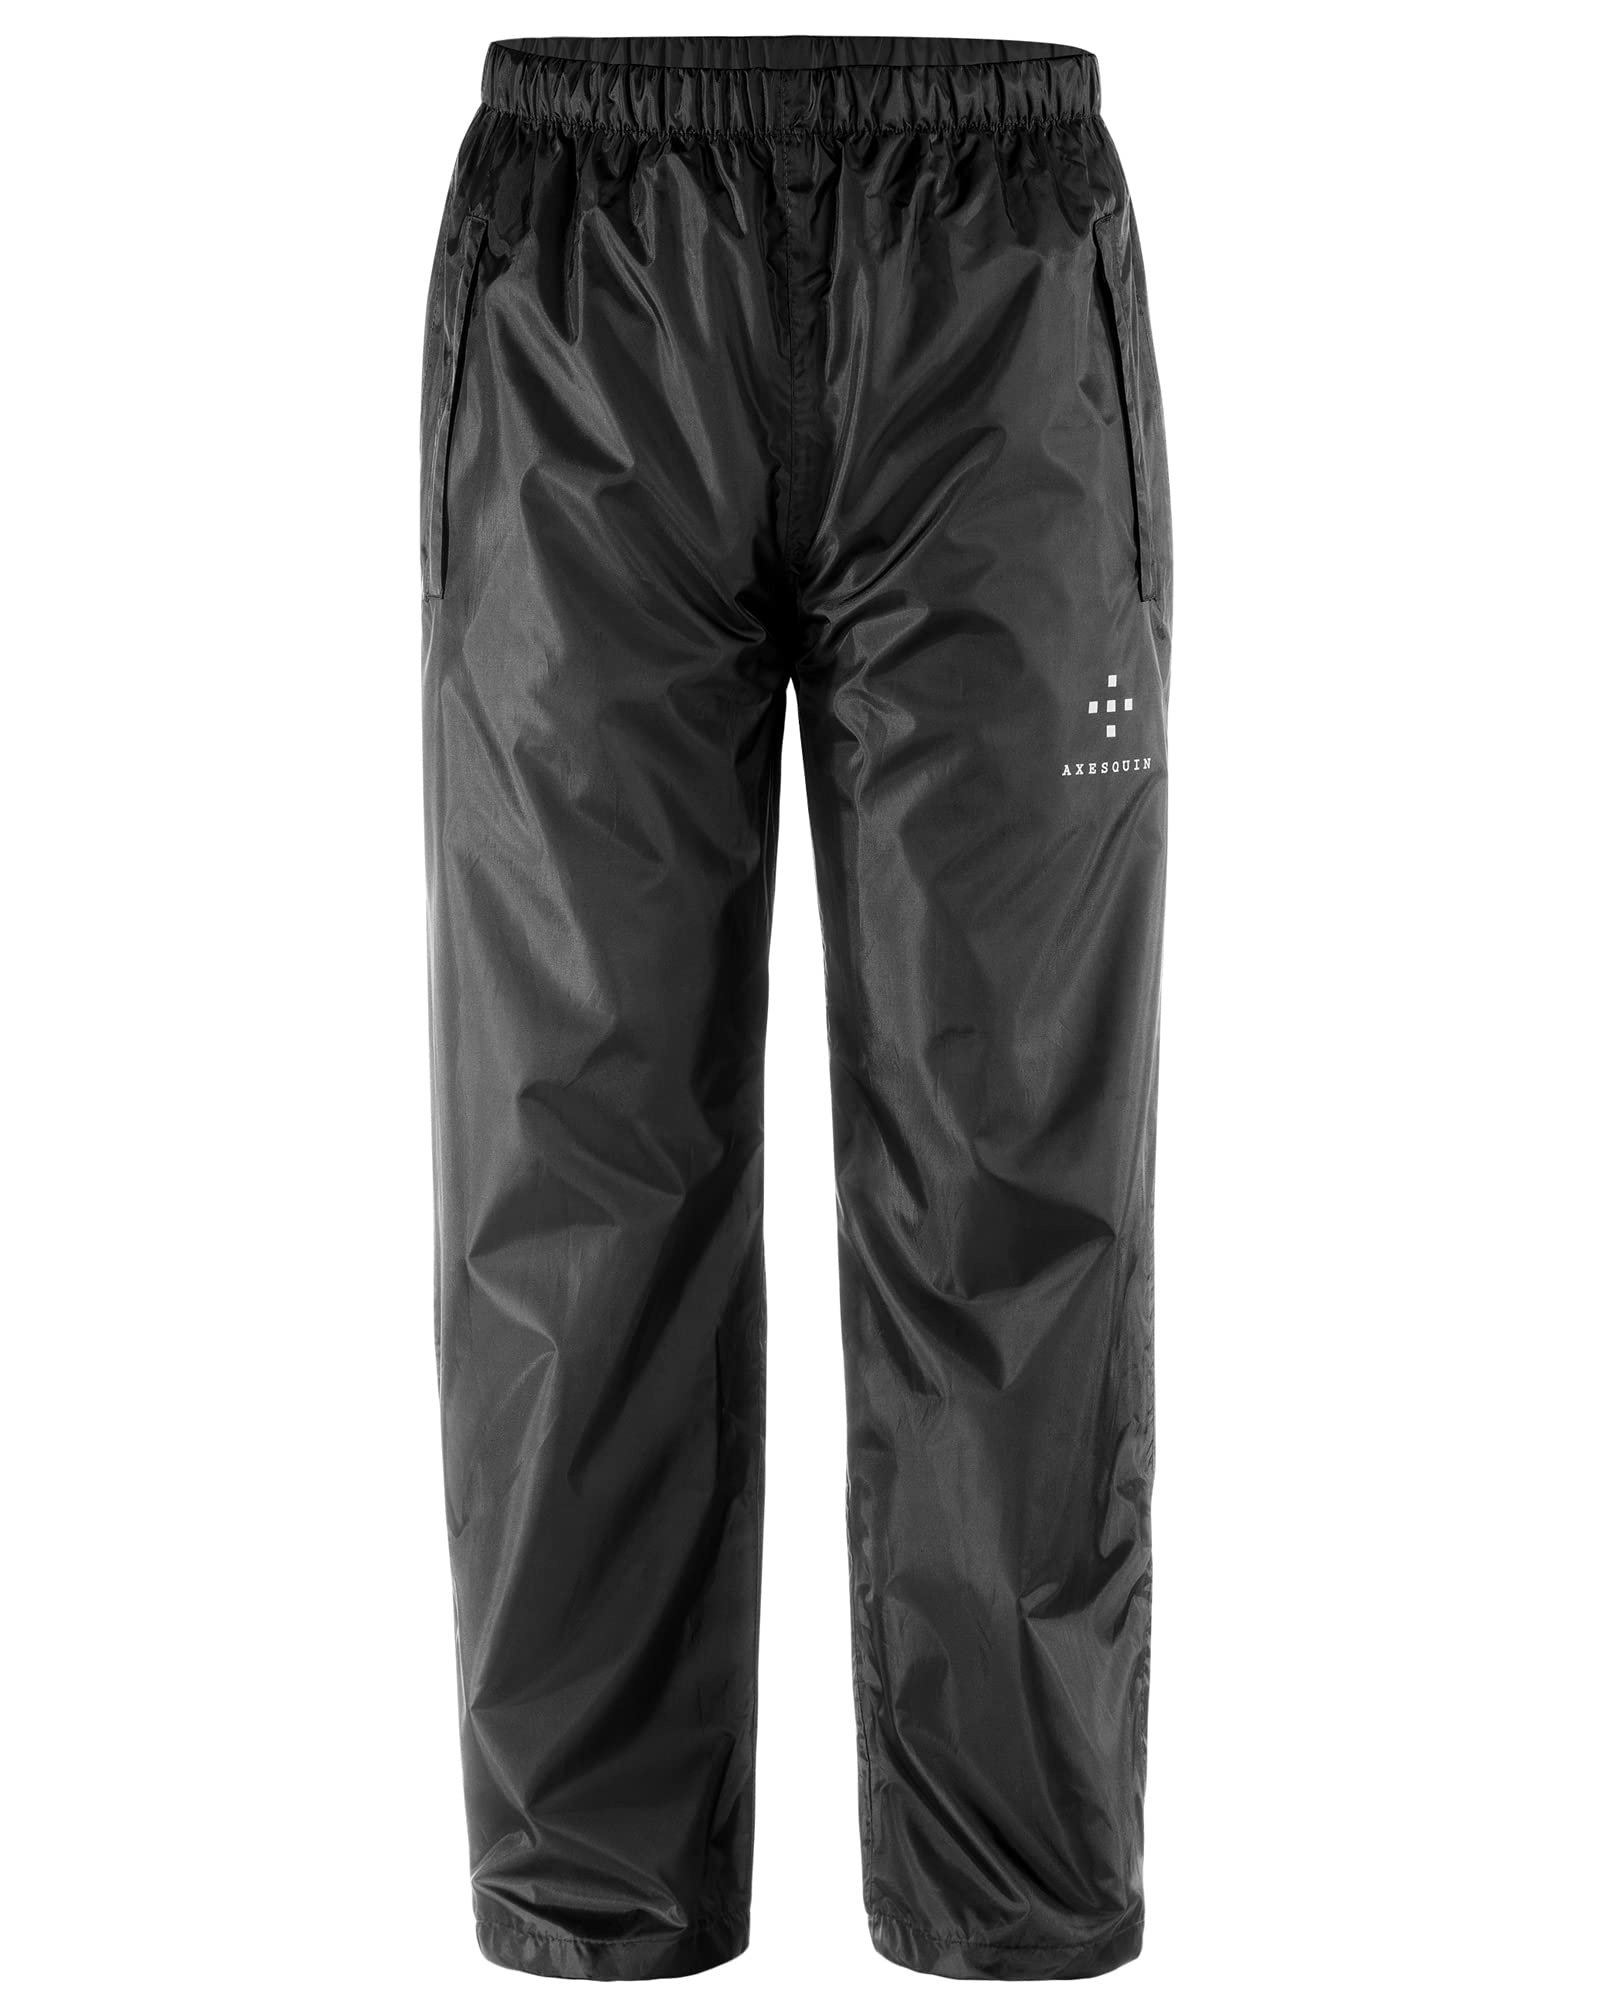 Shedrain Mens Sport Rain Pants XL Golf Fishing Outdoors Black With Bag  Ripstop